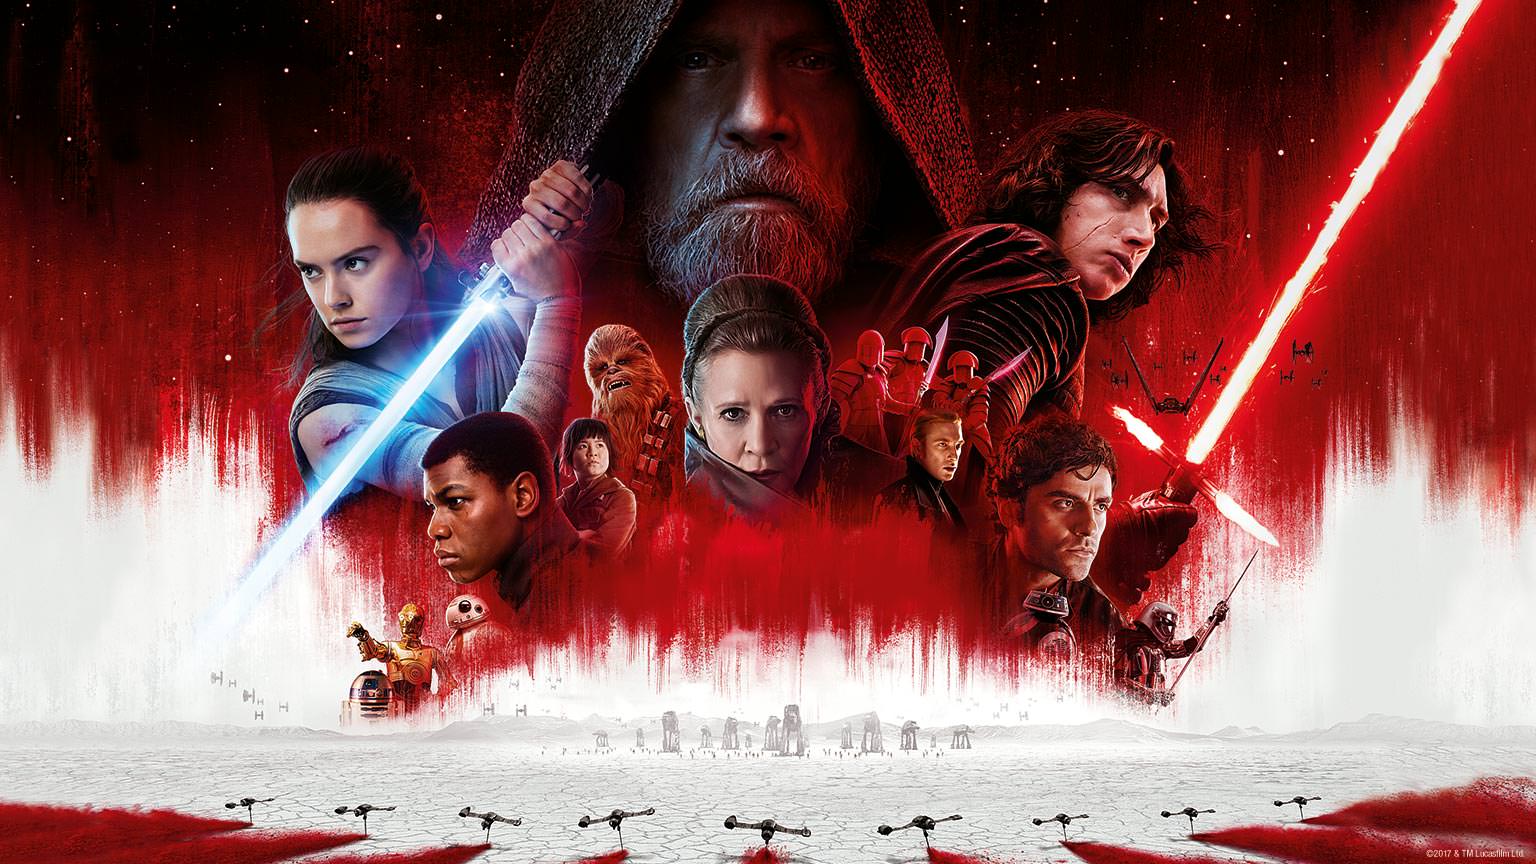 Mr. Movie: Star Wars: The Last Jedi (2017) (Movie Review)